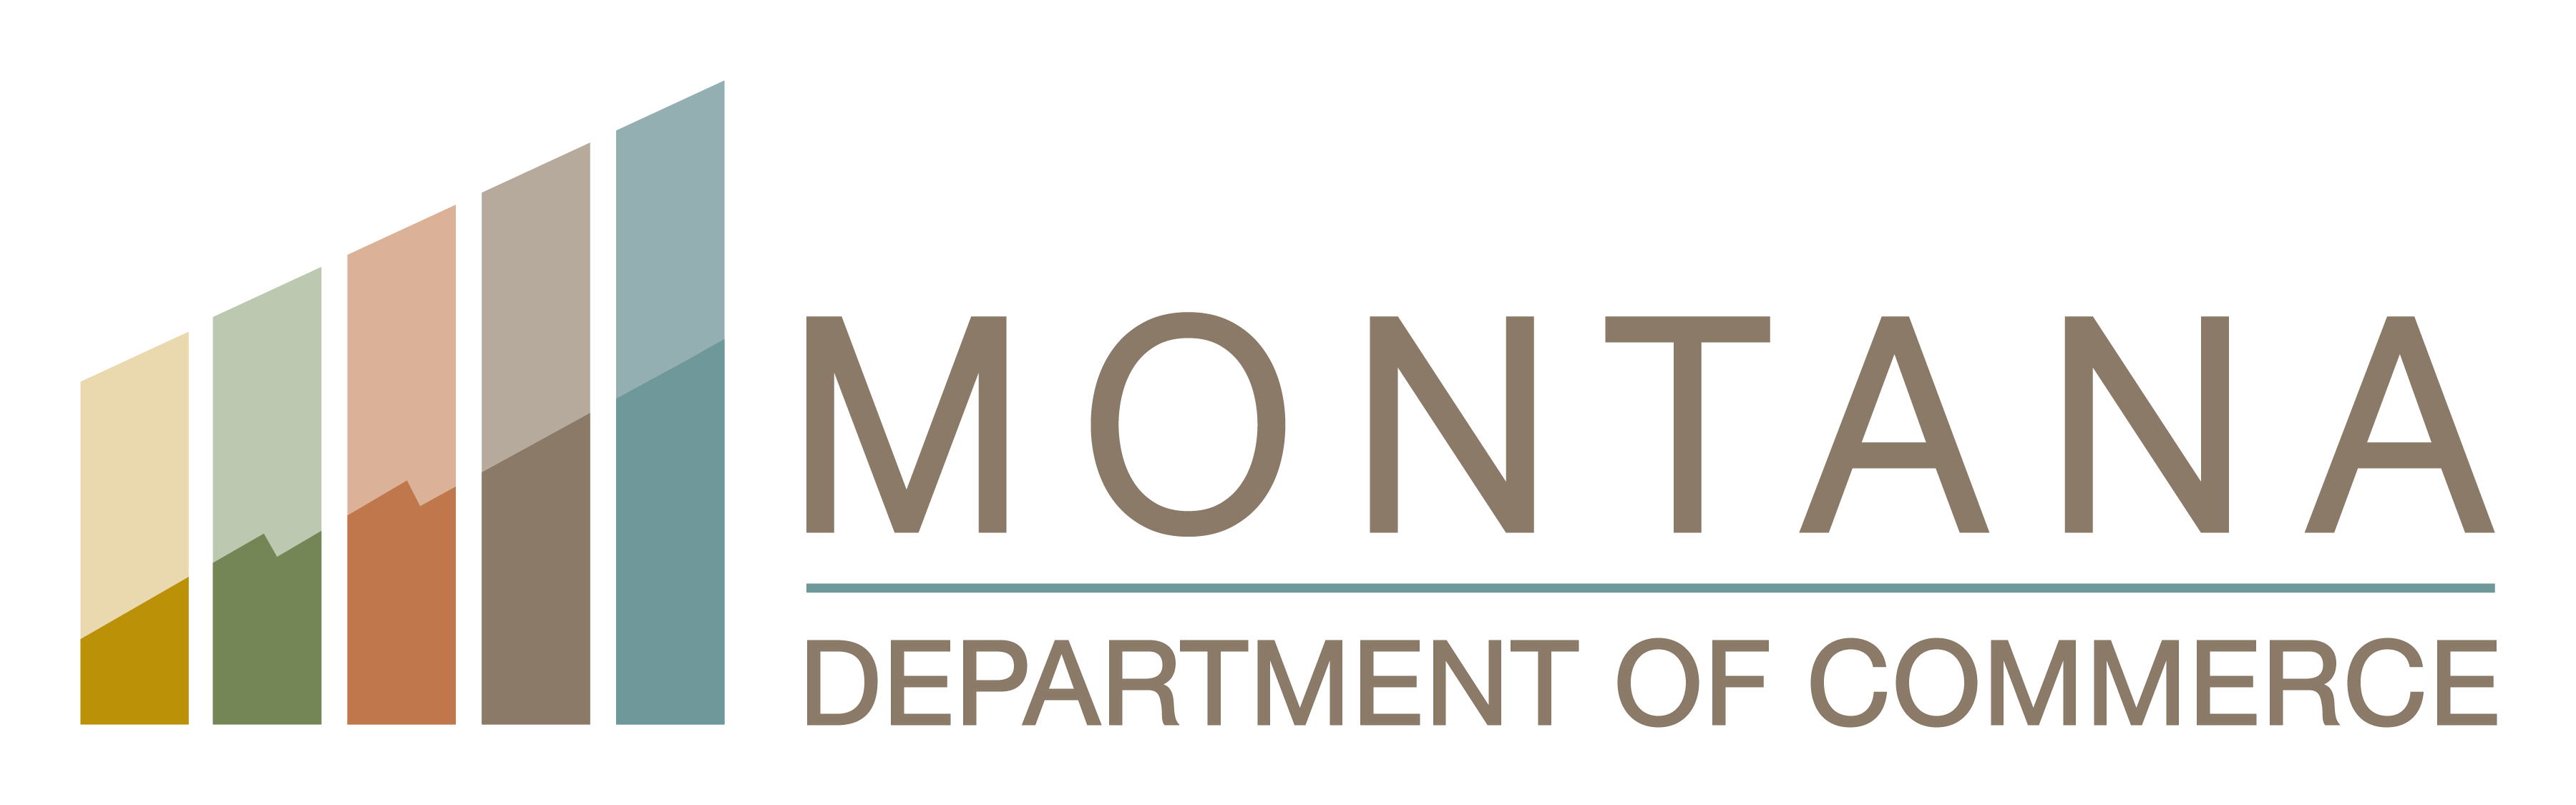 Montana Department of Commerce Logo